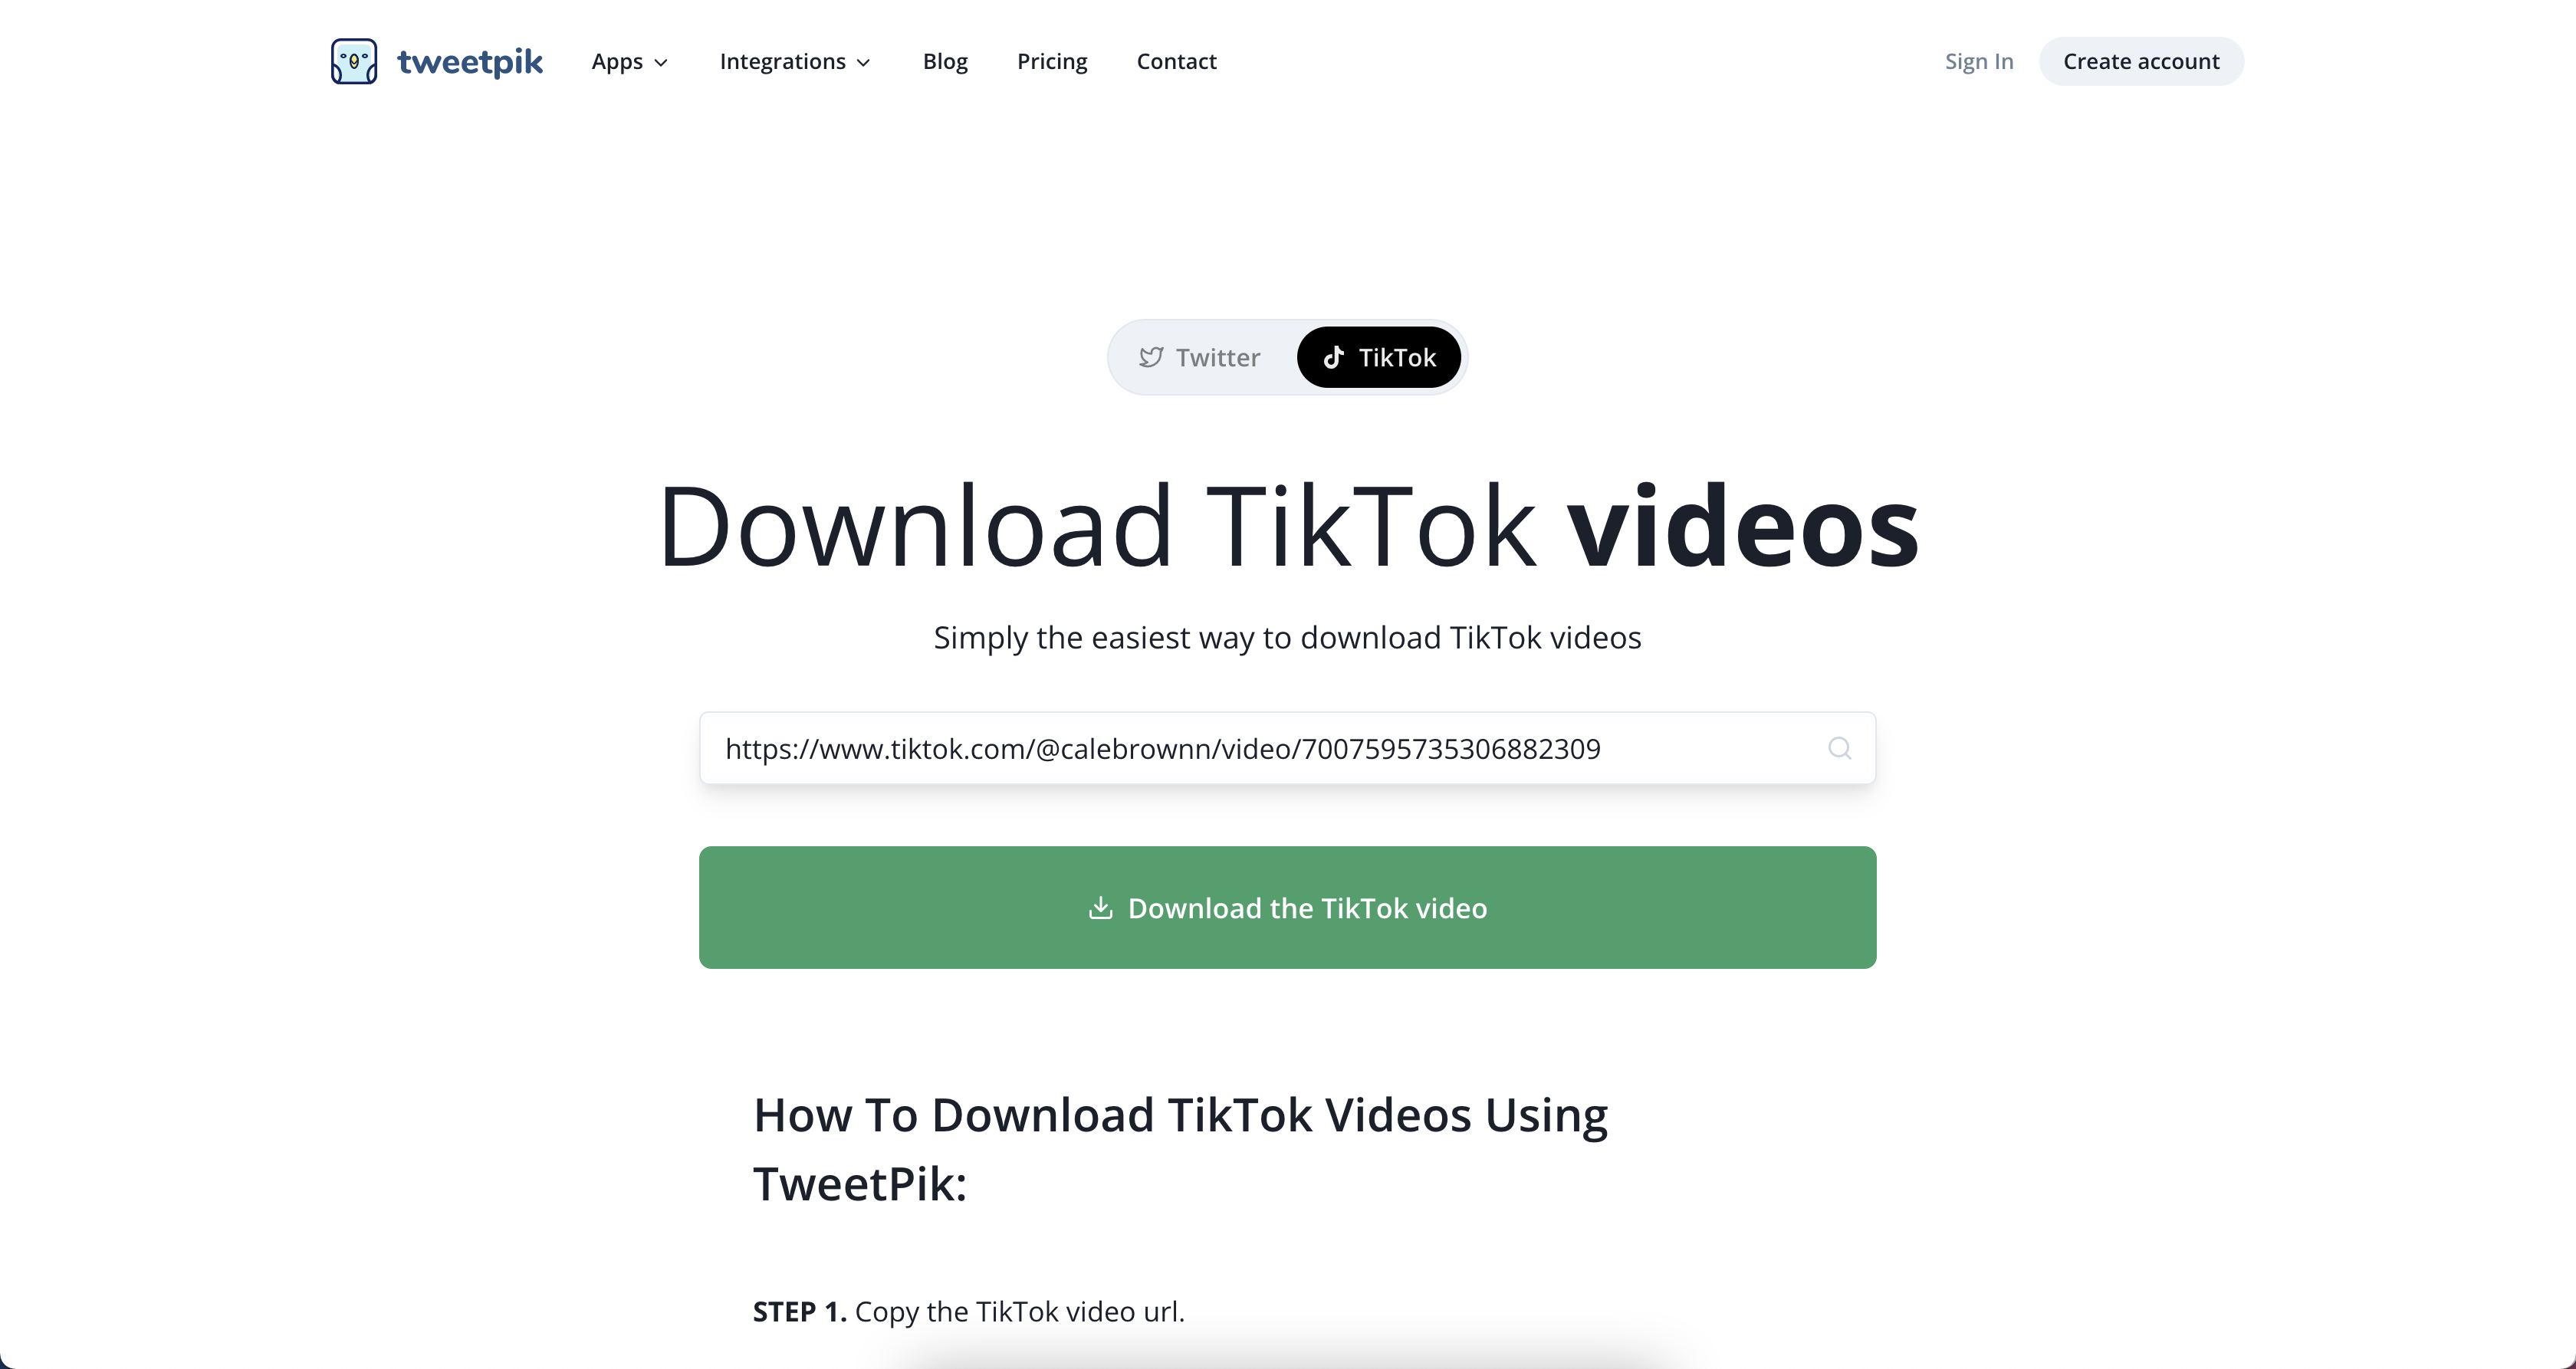 Paste TikTok video url in the search field